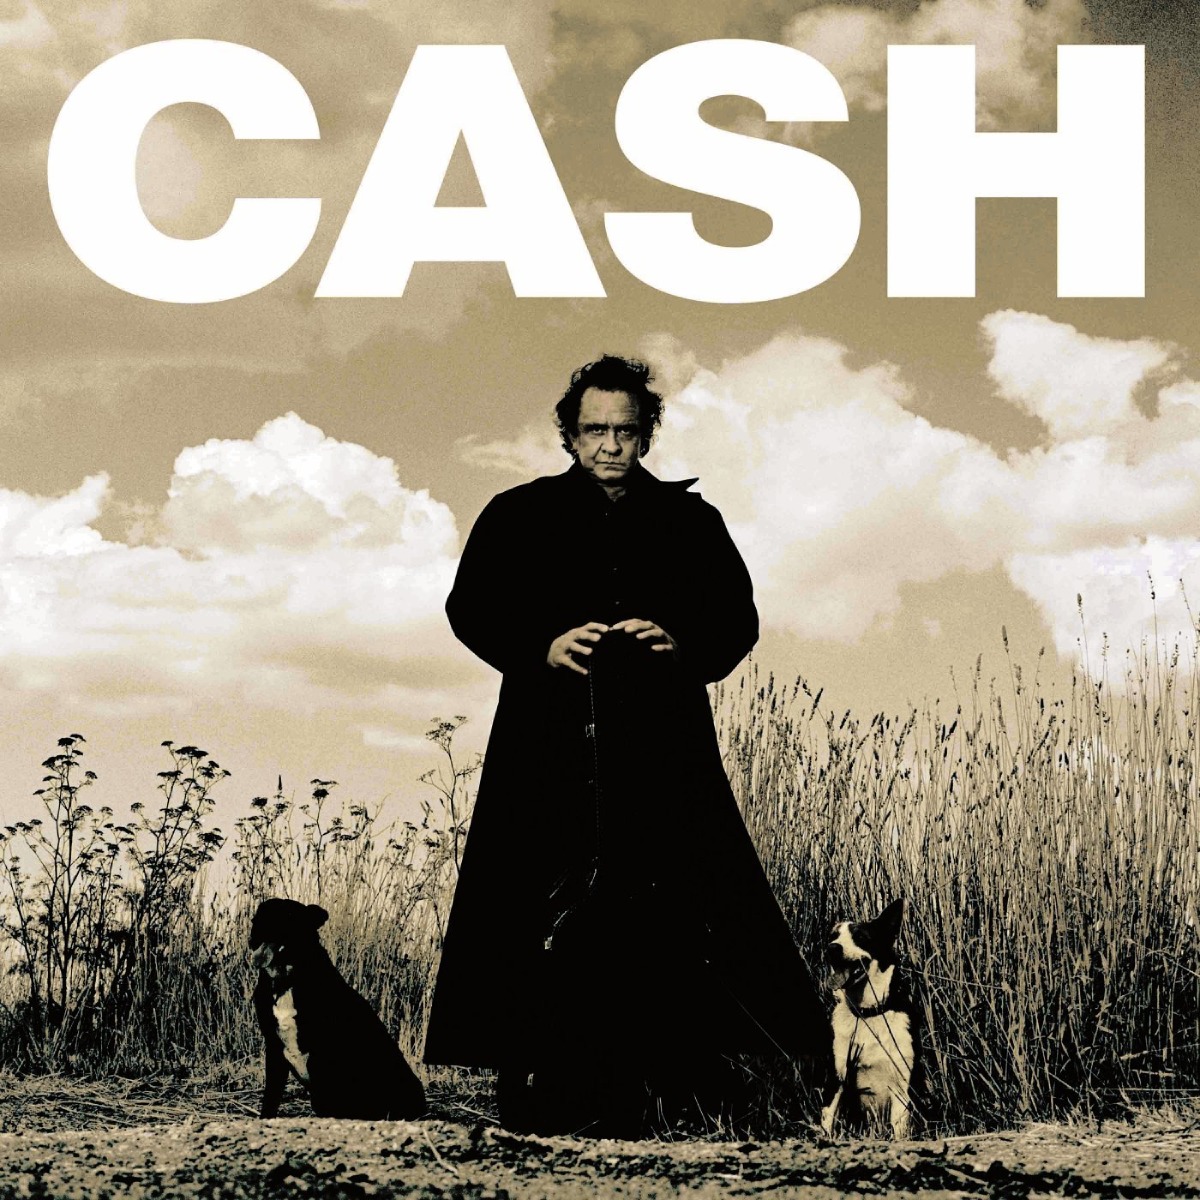 Johnny Cash's "American Recordings" album cover